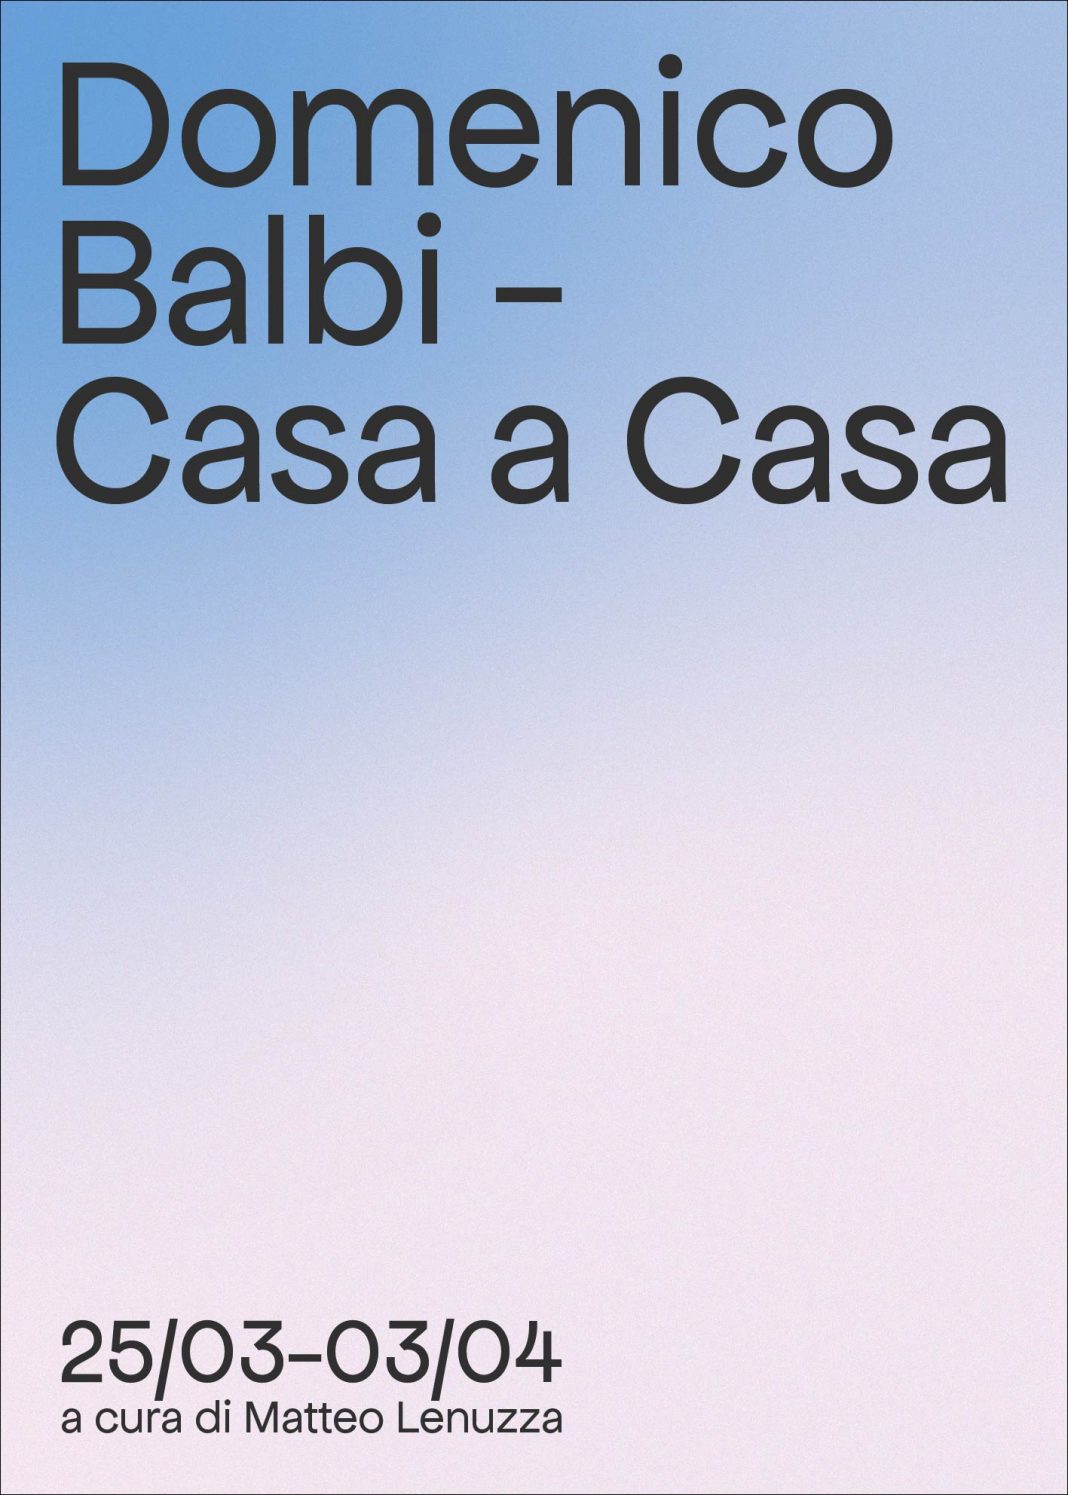 Domenico Balbi – Casa a Casahttps://www.exibart.com/repository/media/formidable/11/img/247/Domenico_Balbi-04-1068x1495.jpg